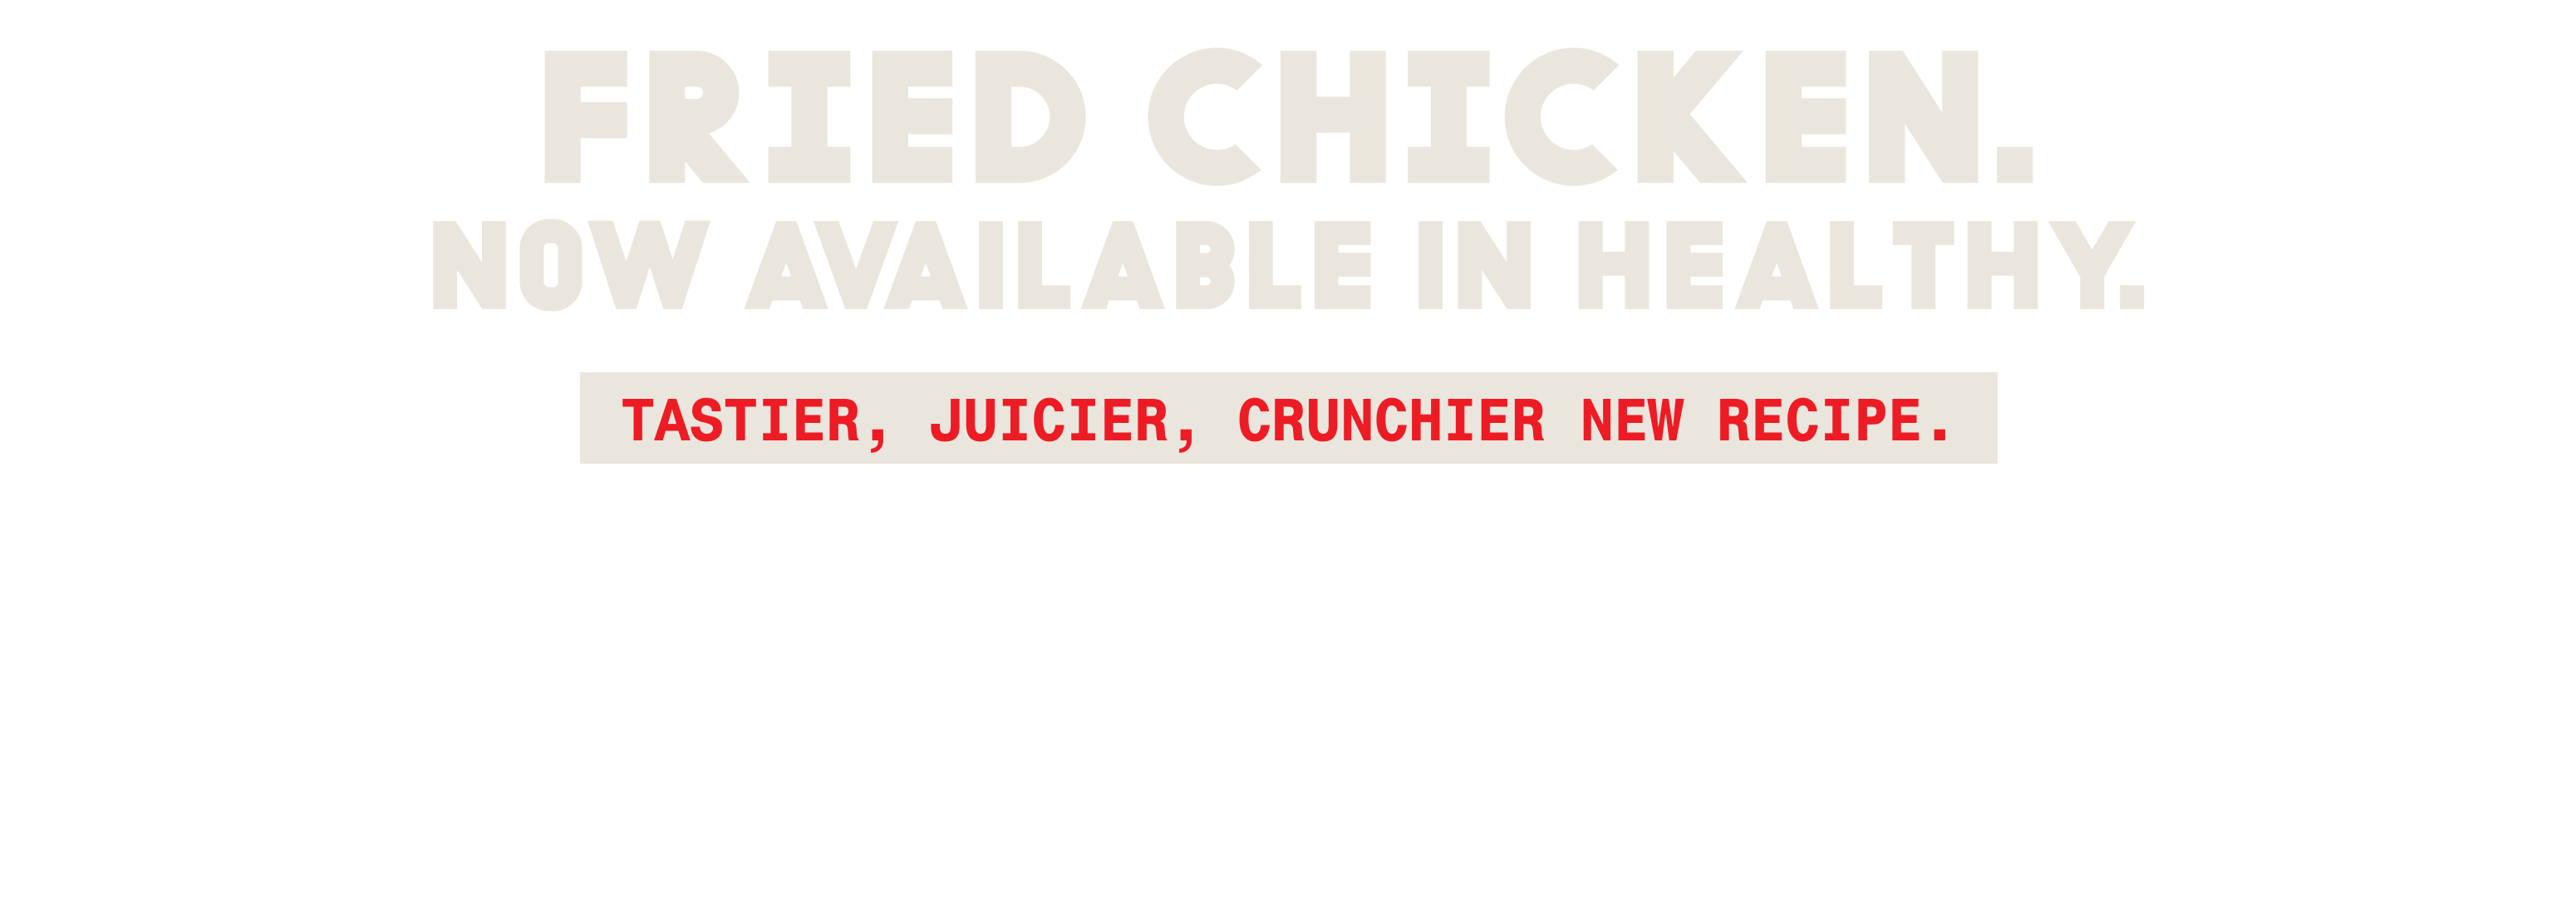 Fried Chicken, now available in healthy. Juicier, tastier, crunchier new recipe.